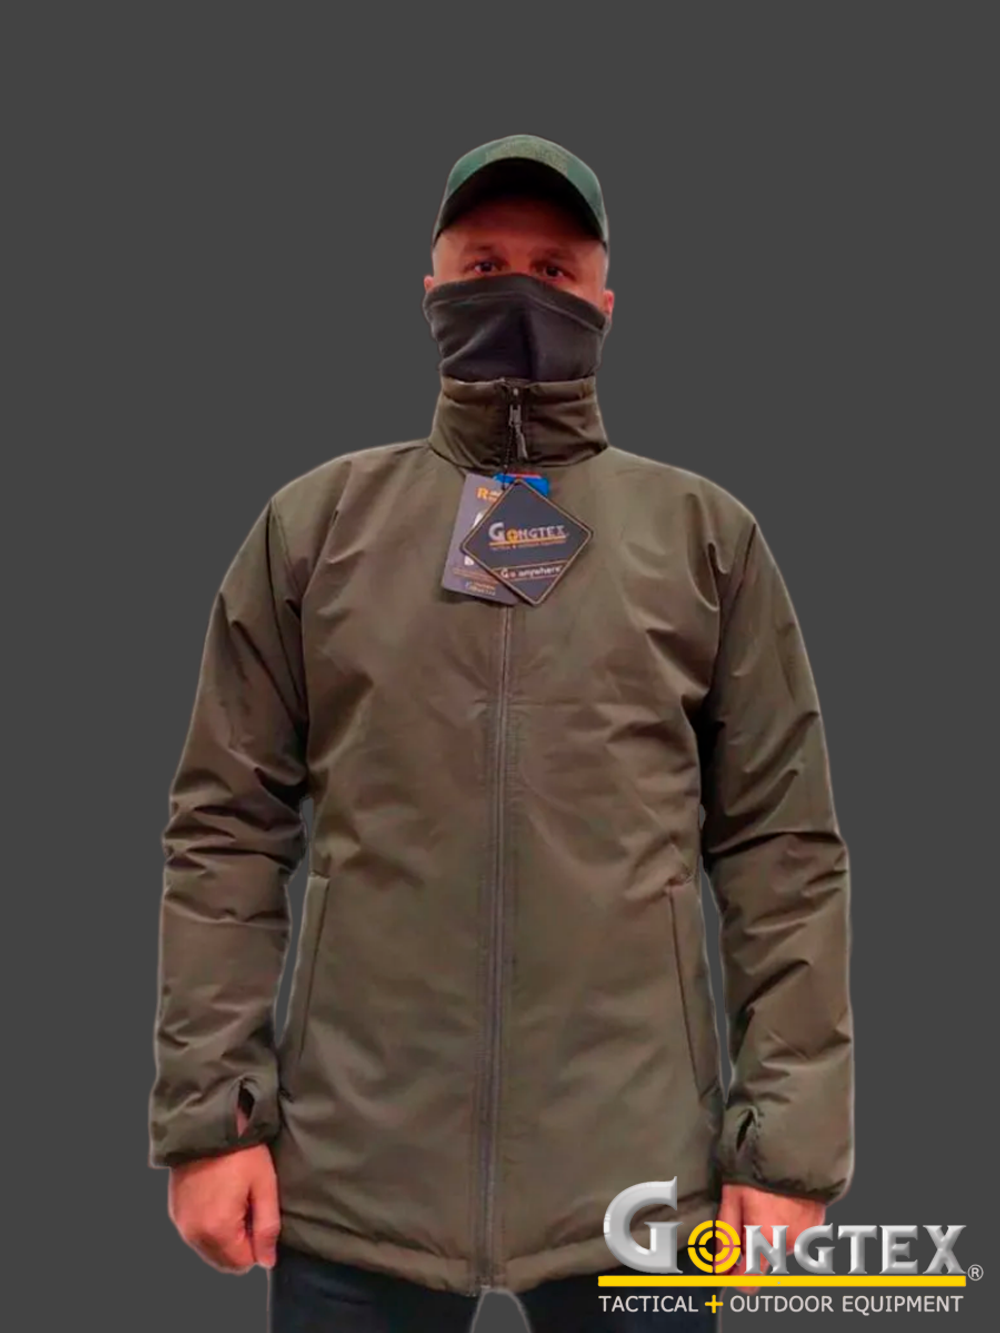 Куртка тактическая Gongtex Level 7 Long Style Cold Weather Jacket. Олива